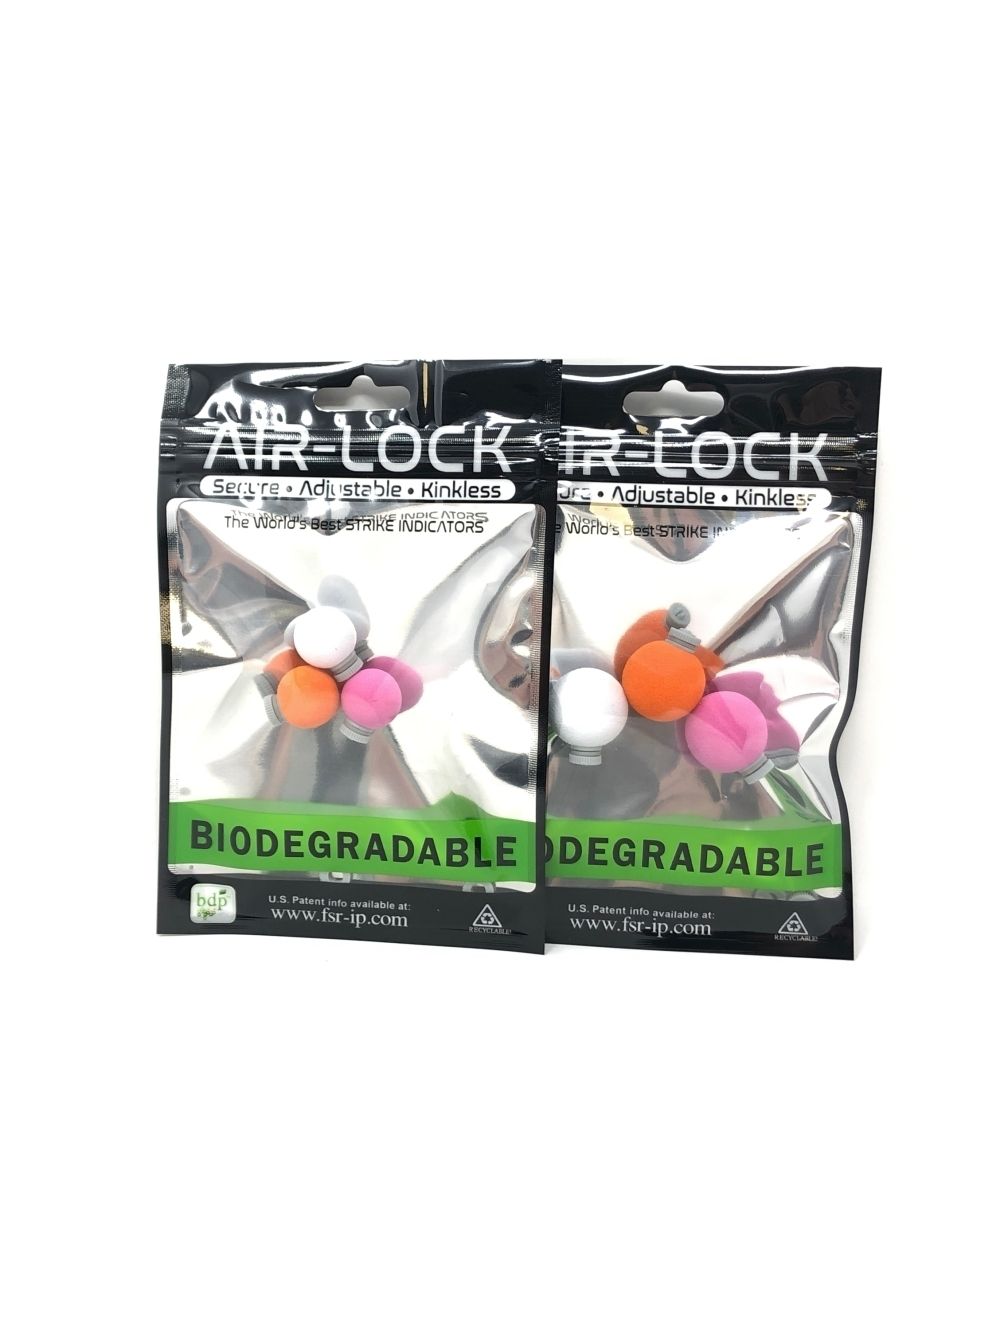 Air-Lock Biodegradable - 3 Pack TheFlyStop